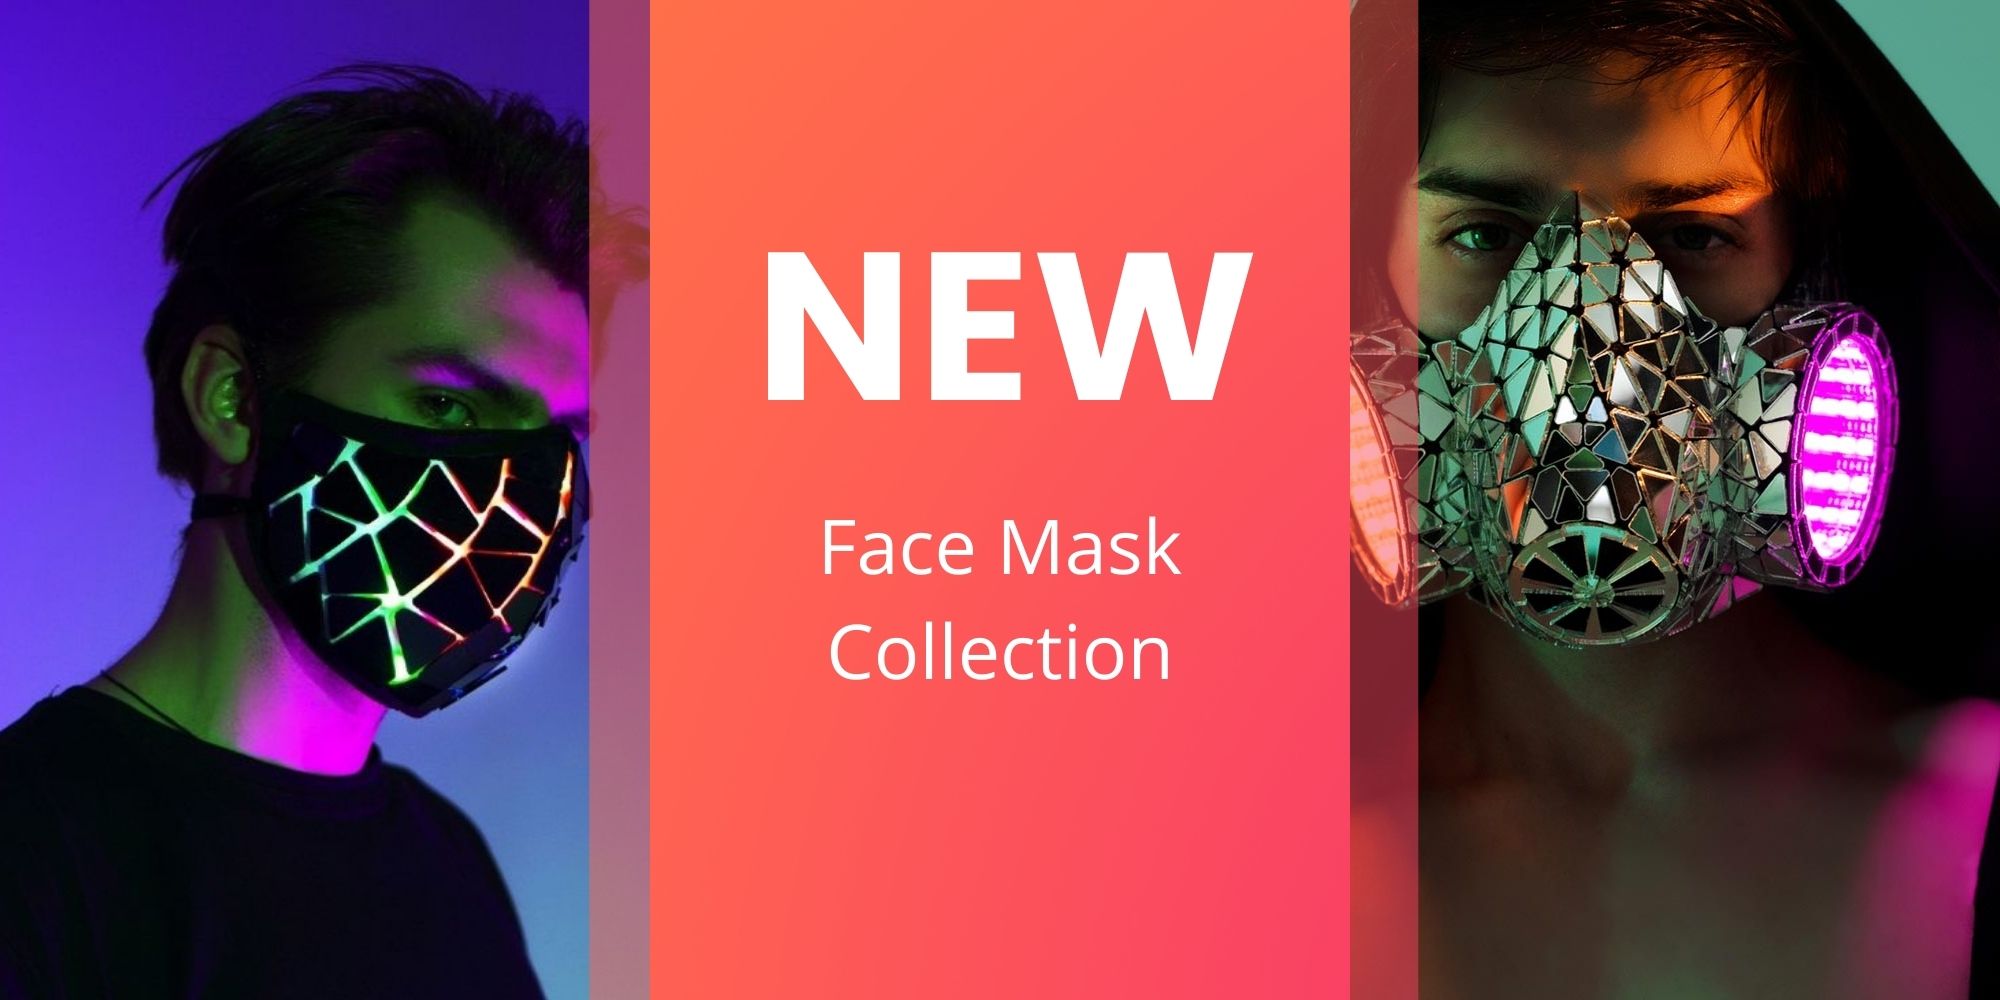 NEW Face masks 2020